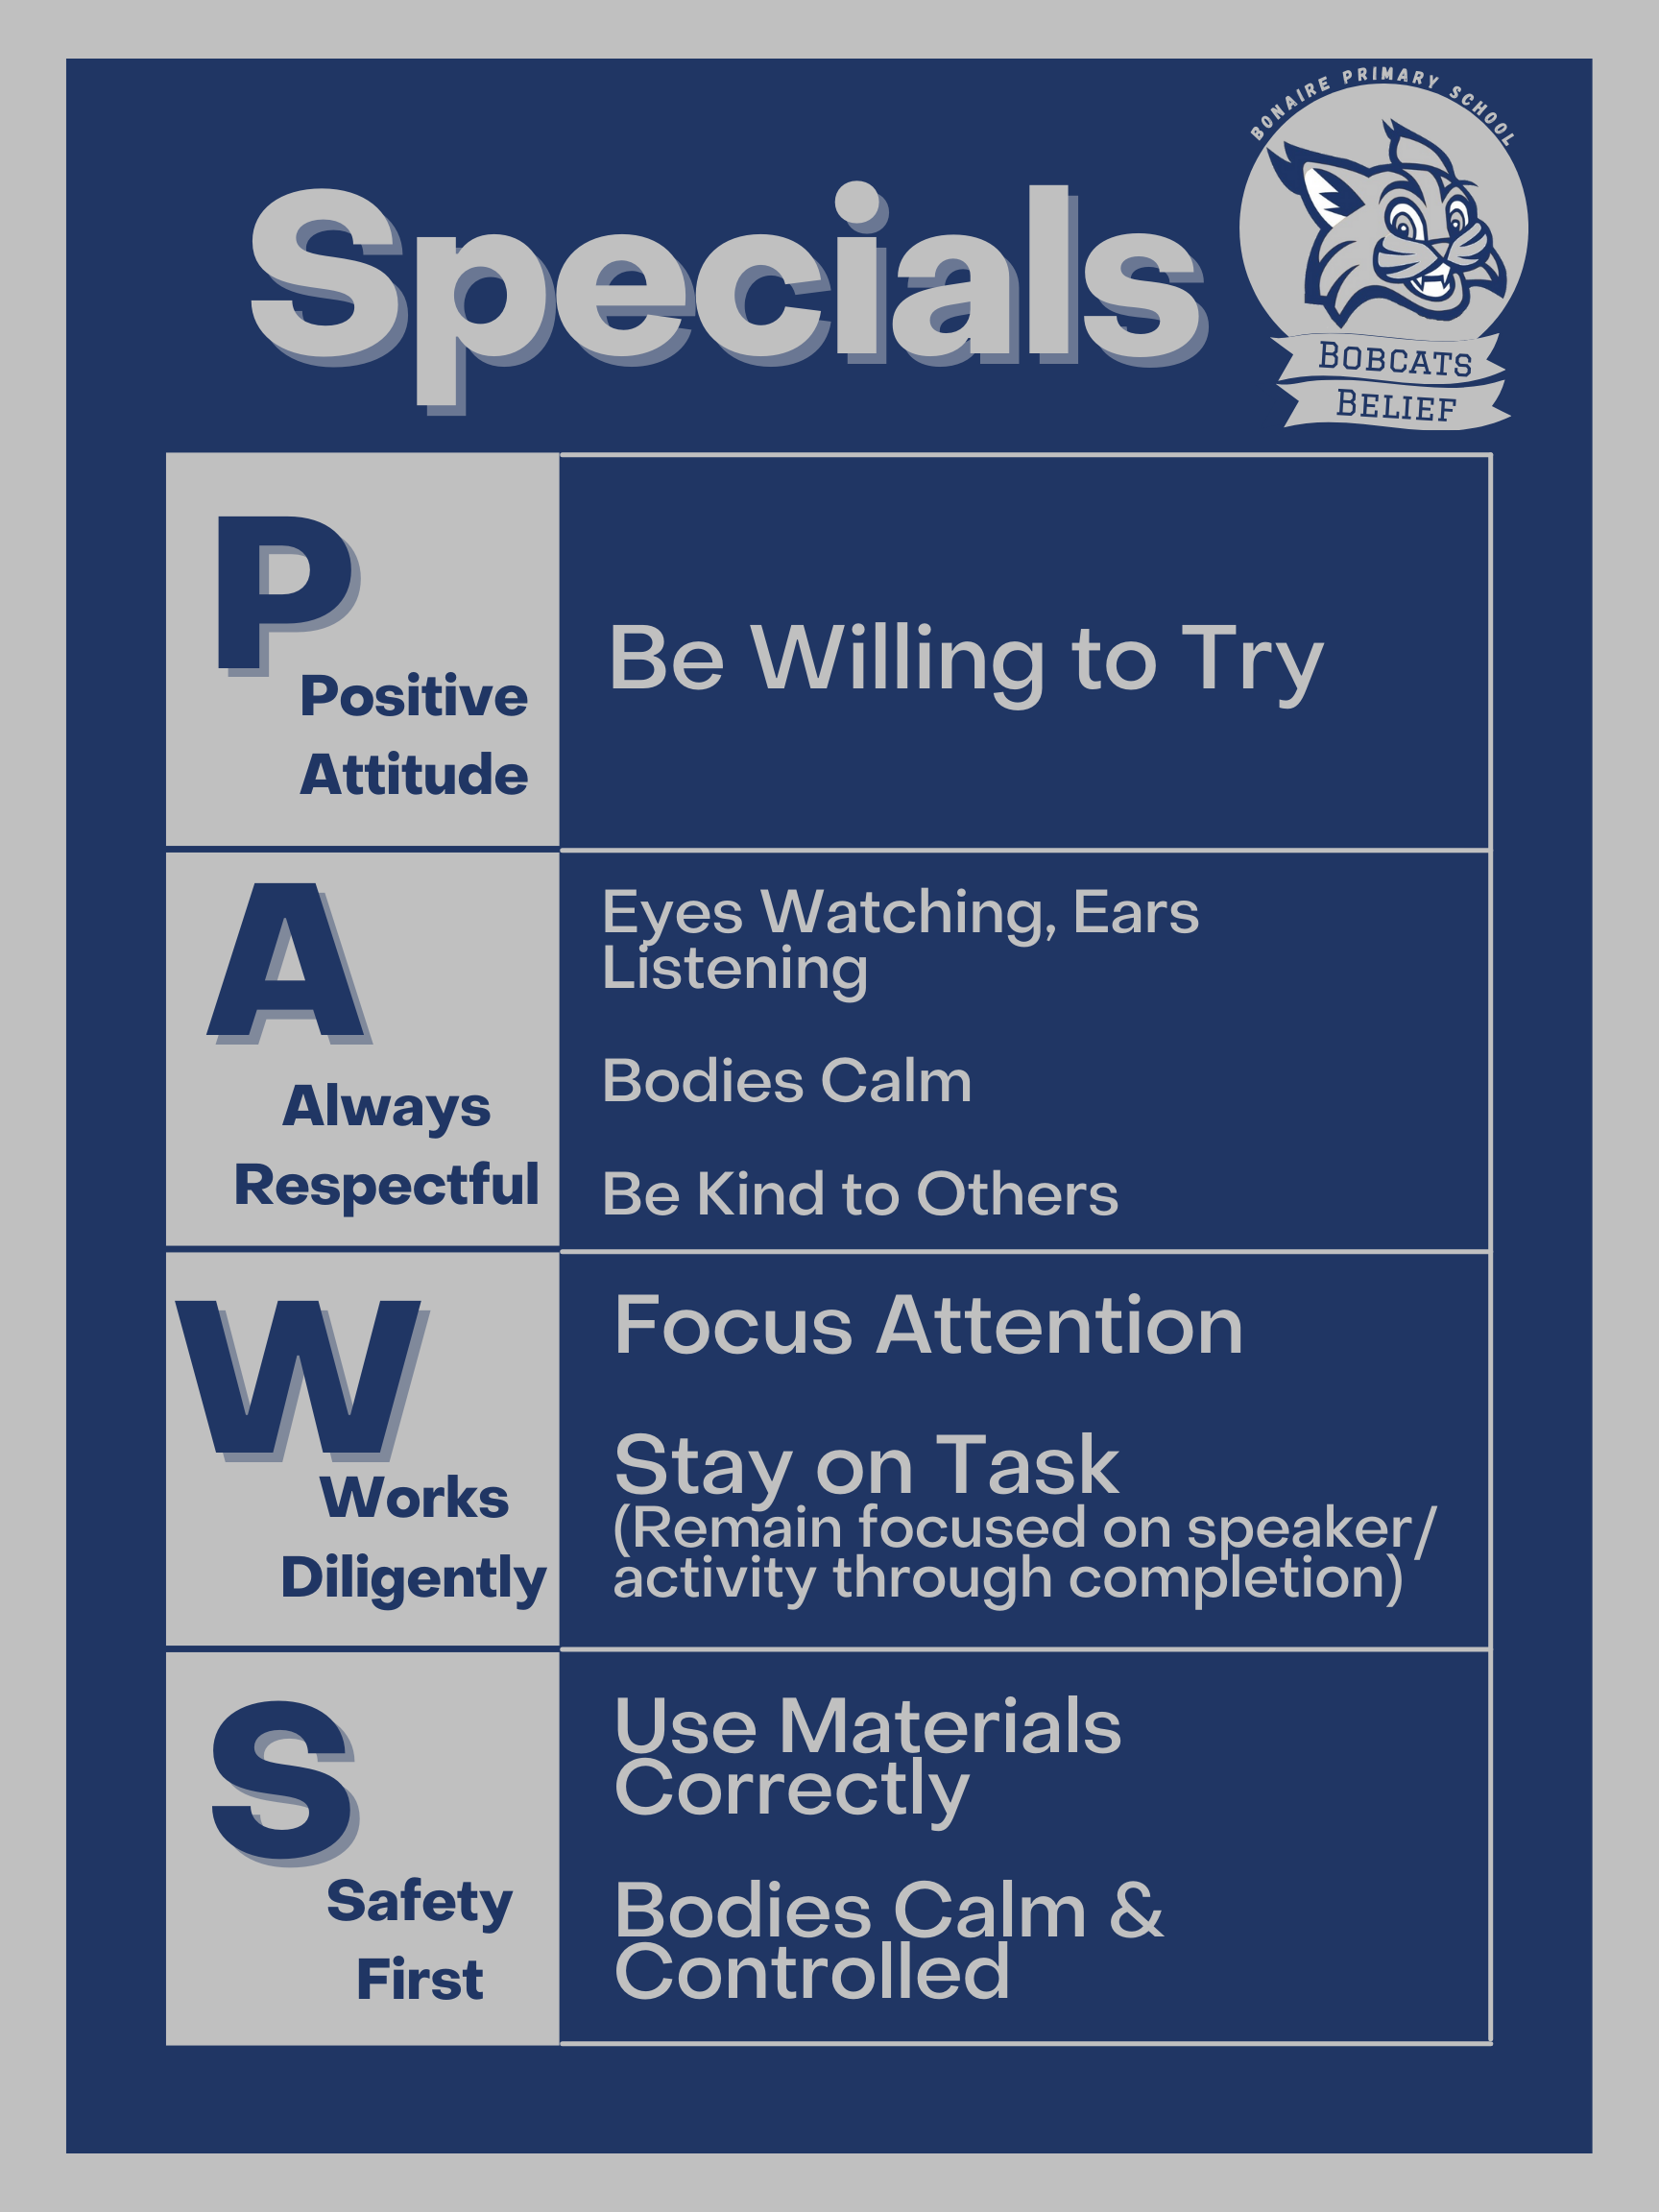 Specials Expectation